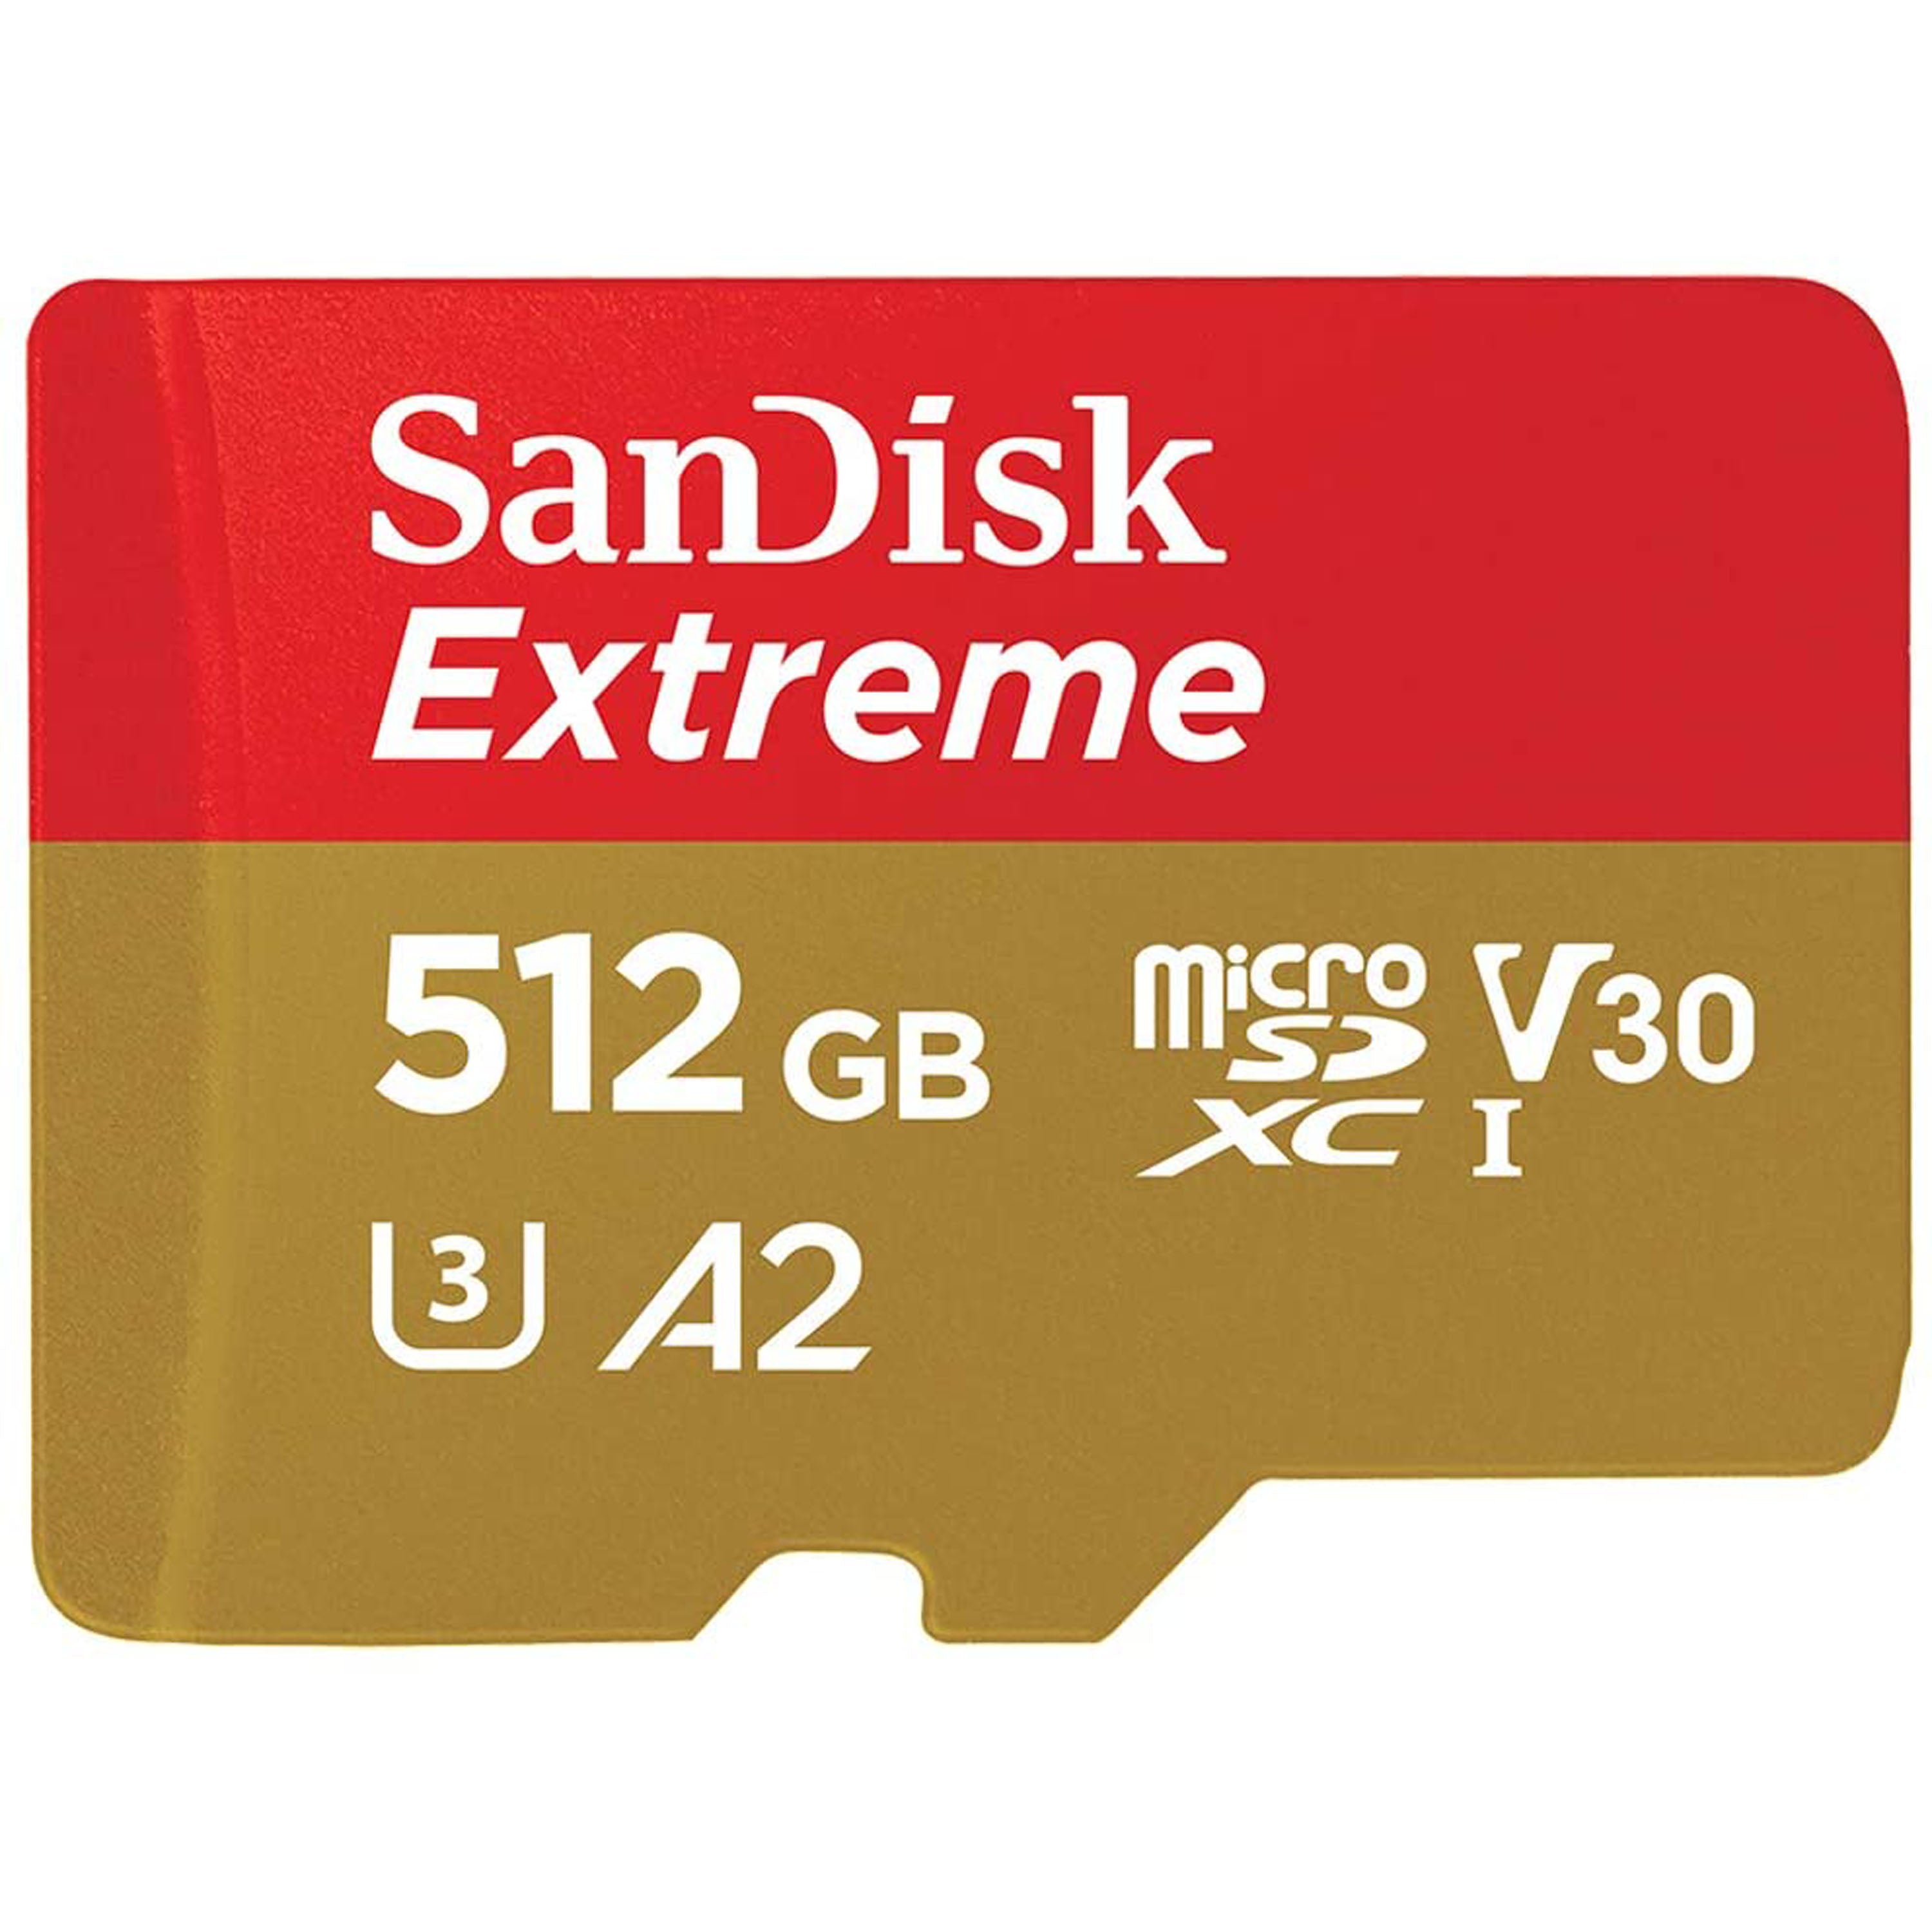 Sandisk Extreme MicroSDXC 512GB 160MB/s UHS-I